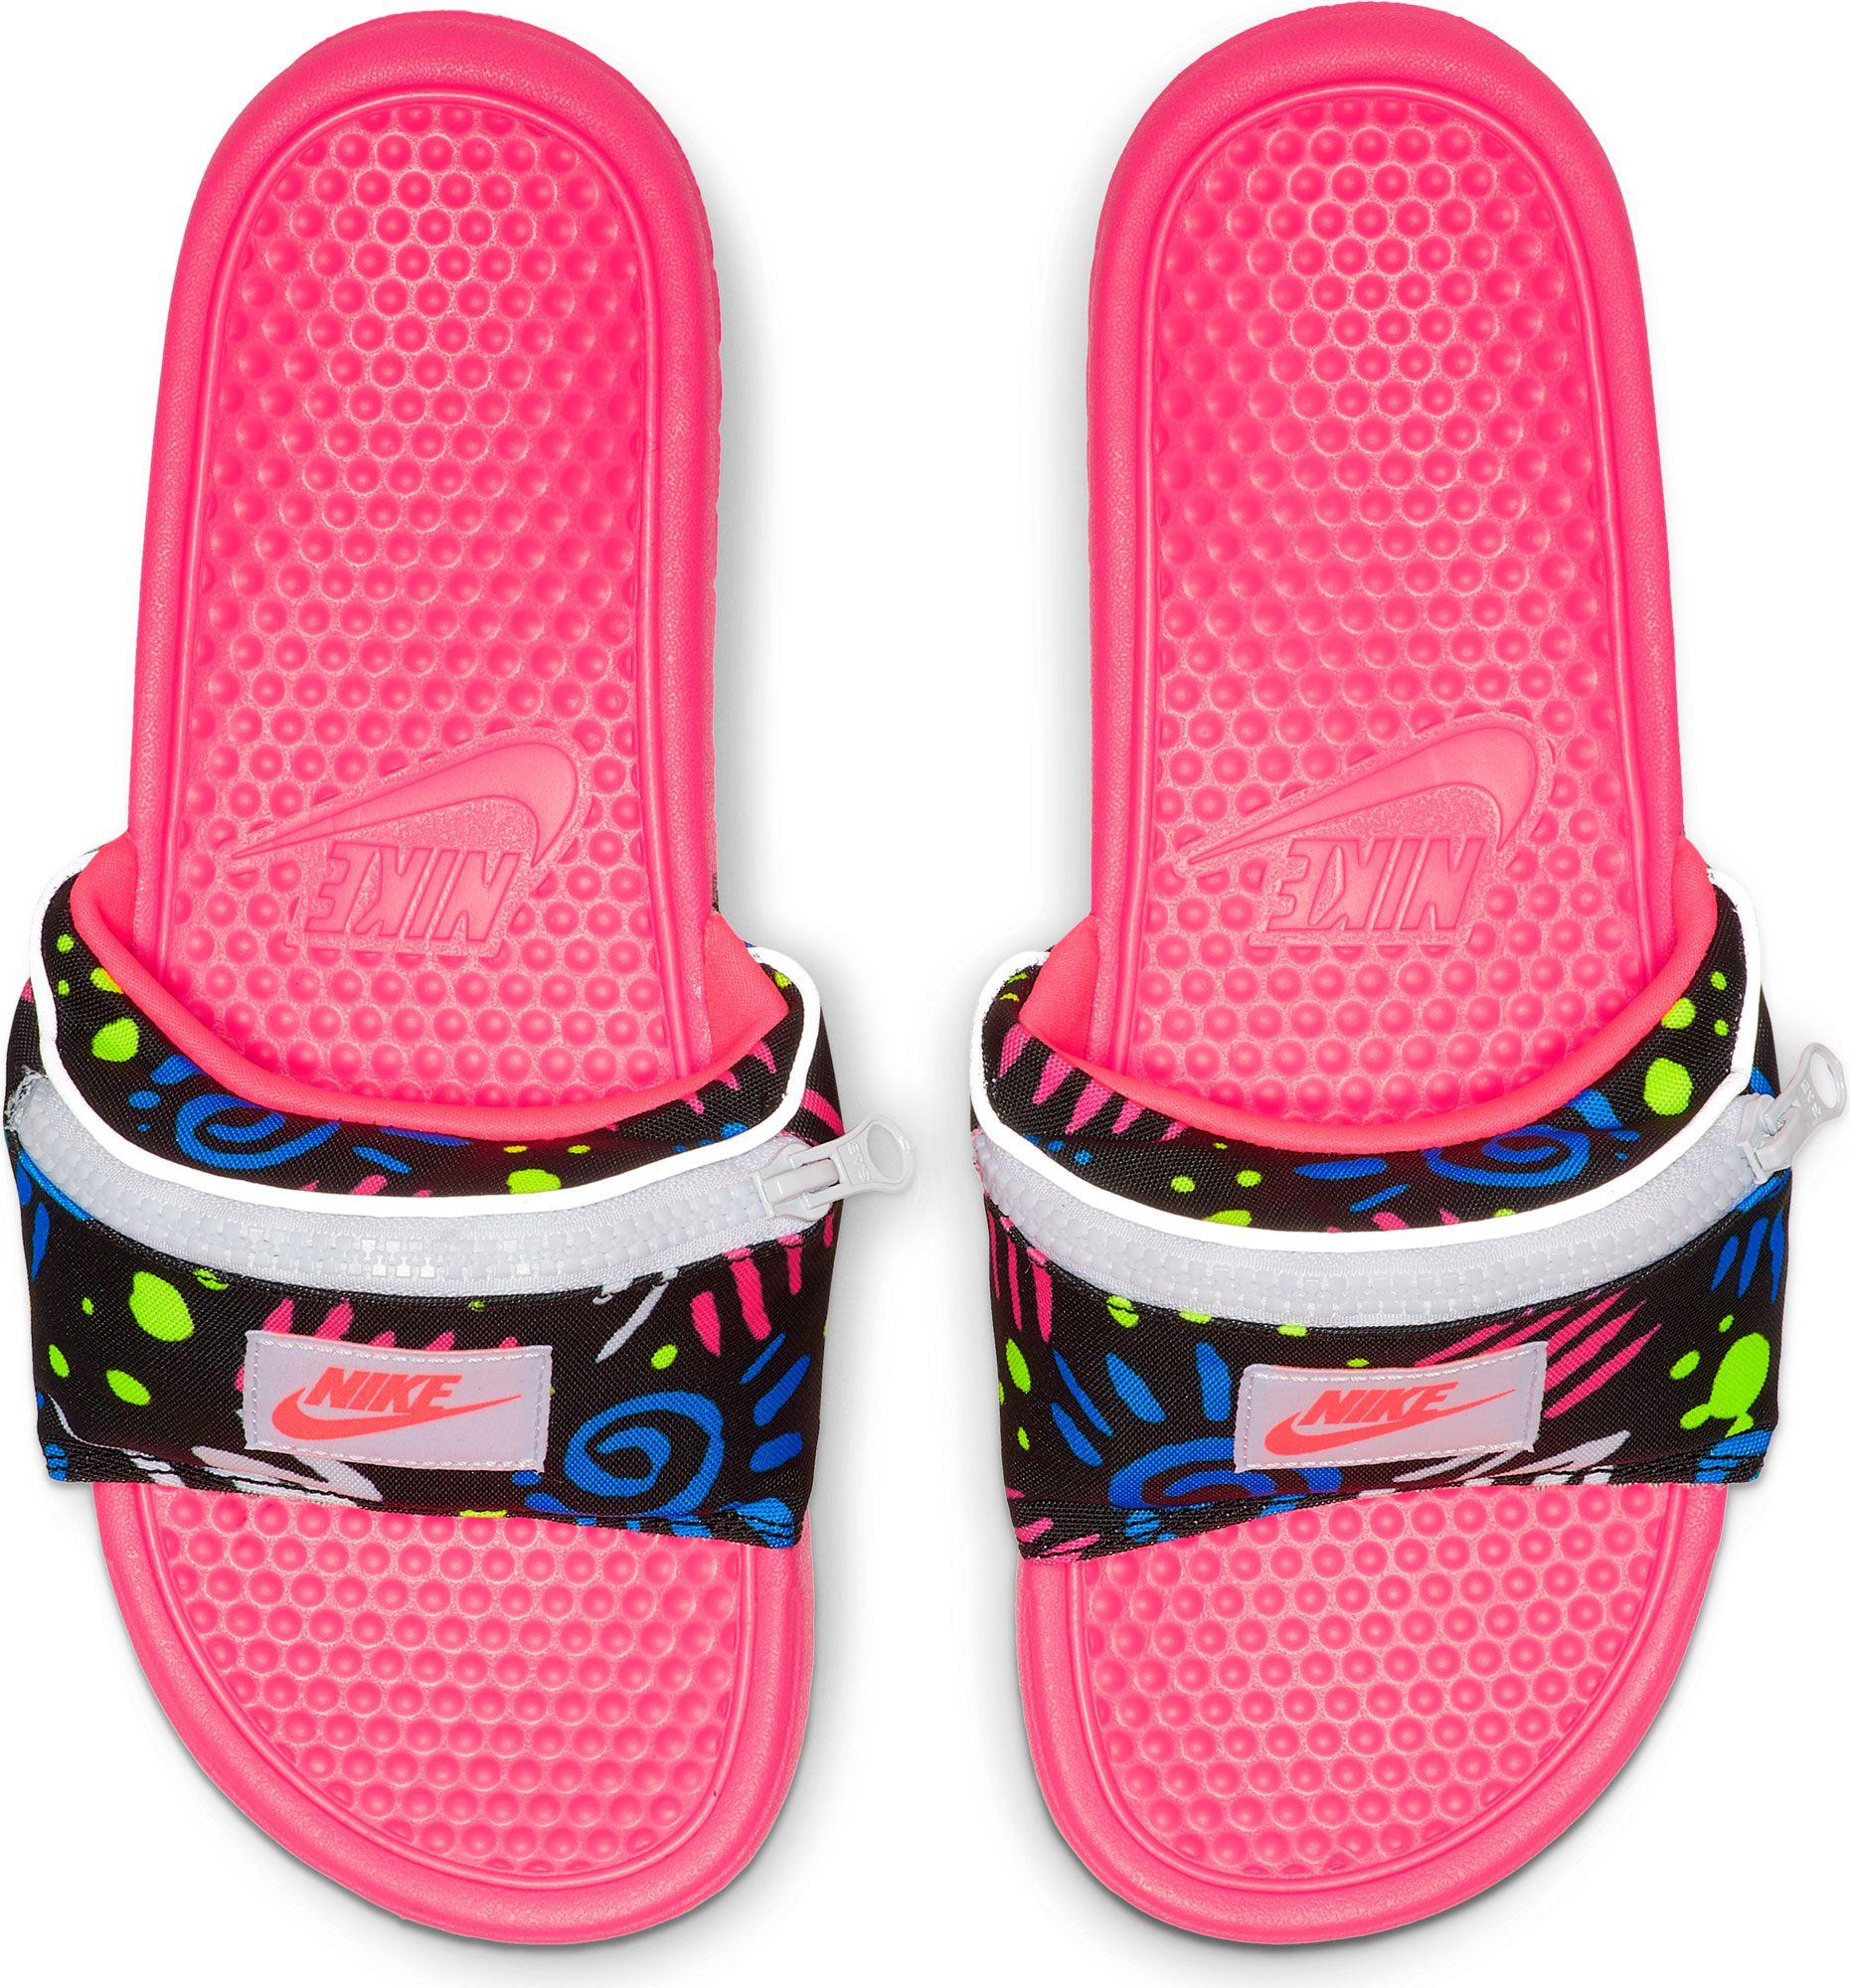 Nike Benassi Jdi Fanny Pack Printed Slide in Pink/Black (Pink) for 